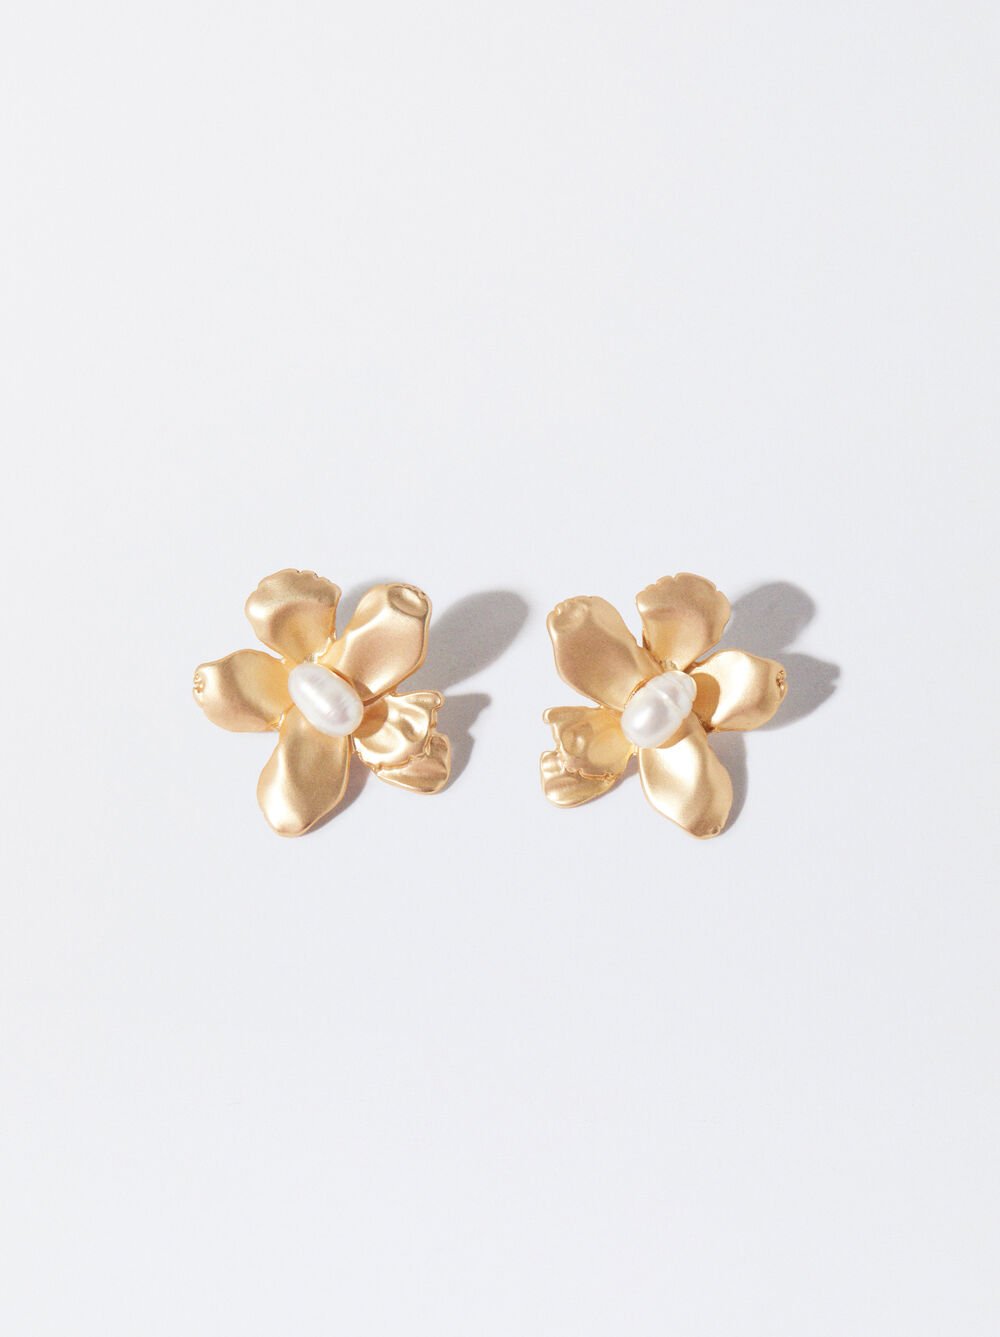 Flower Earrings With Pearls